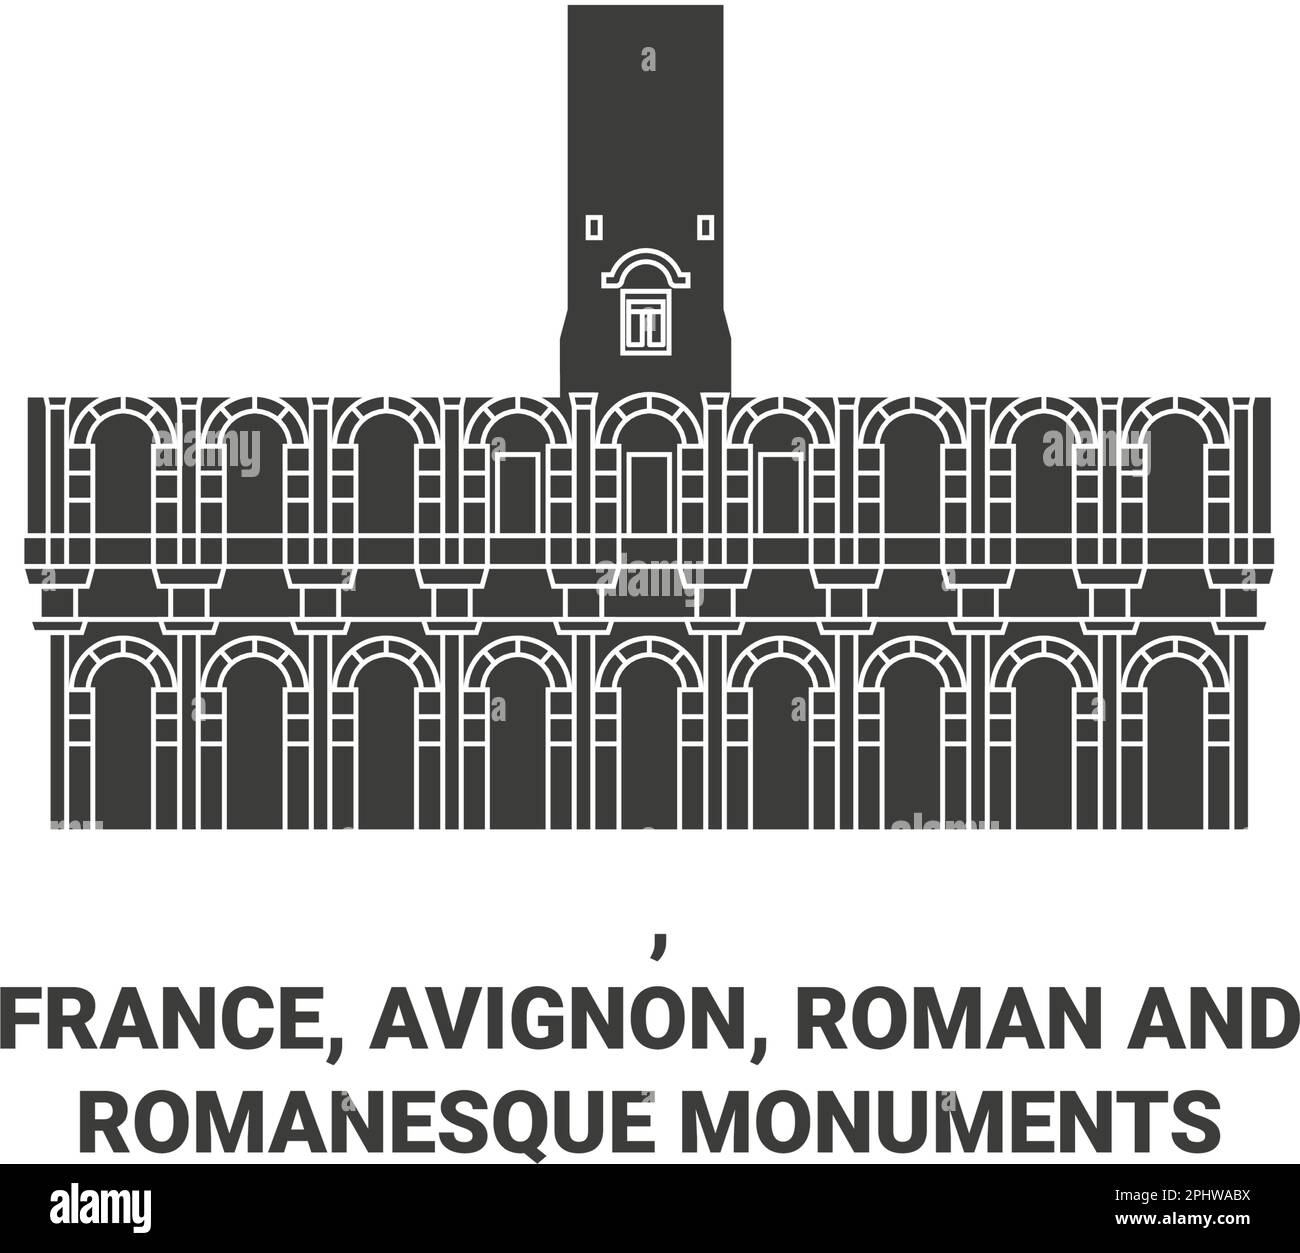 France, Avignon, Roman And Romanesque Monuments travel landmark vector illustration Stock Vector